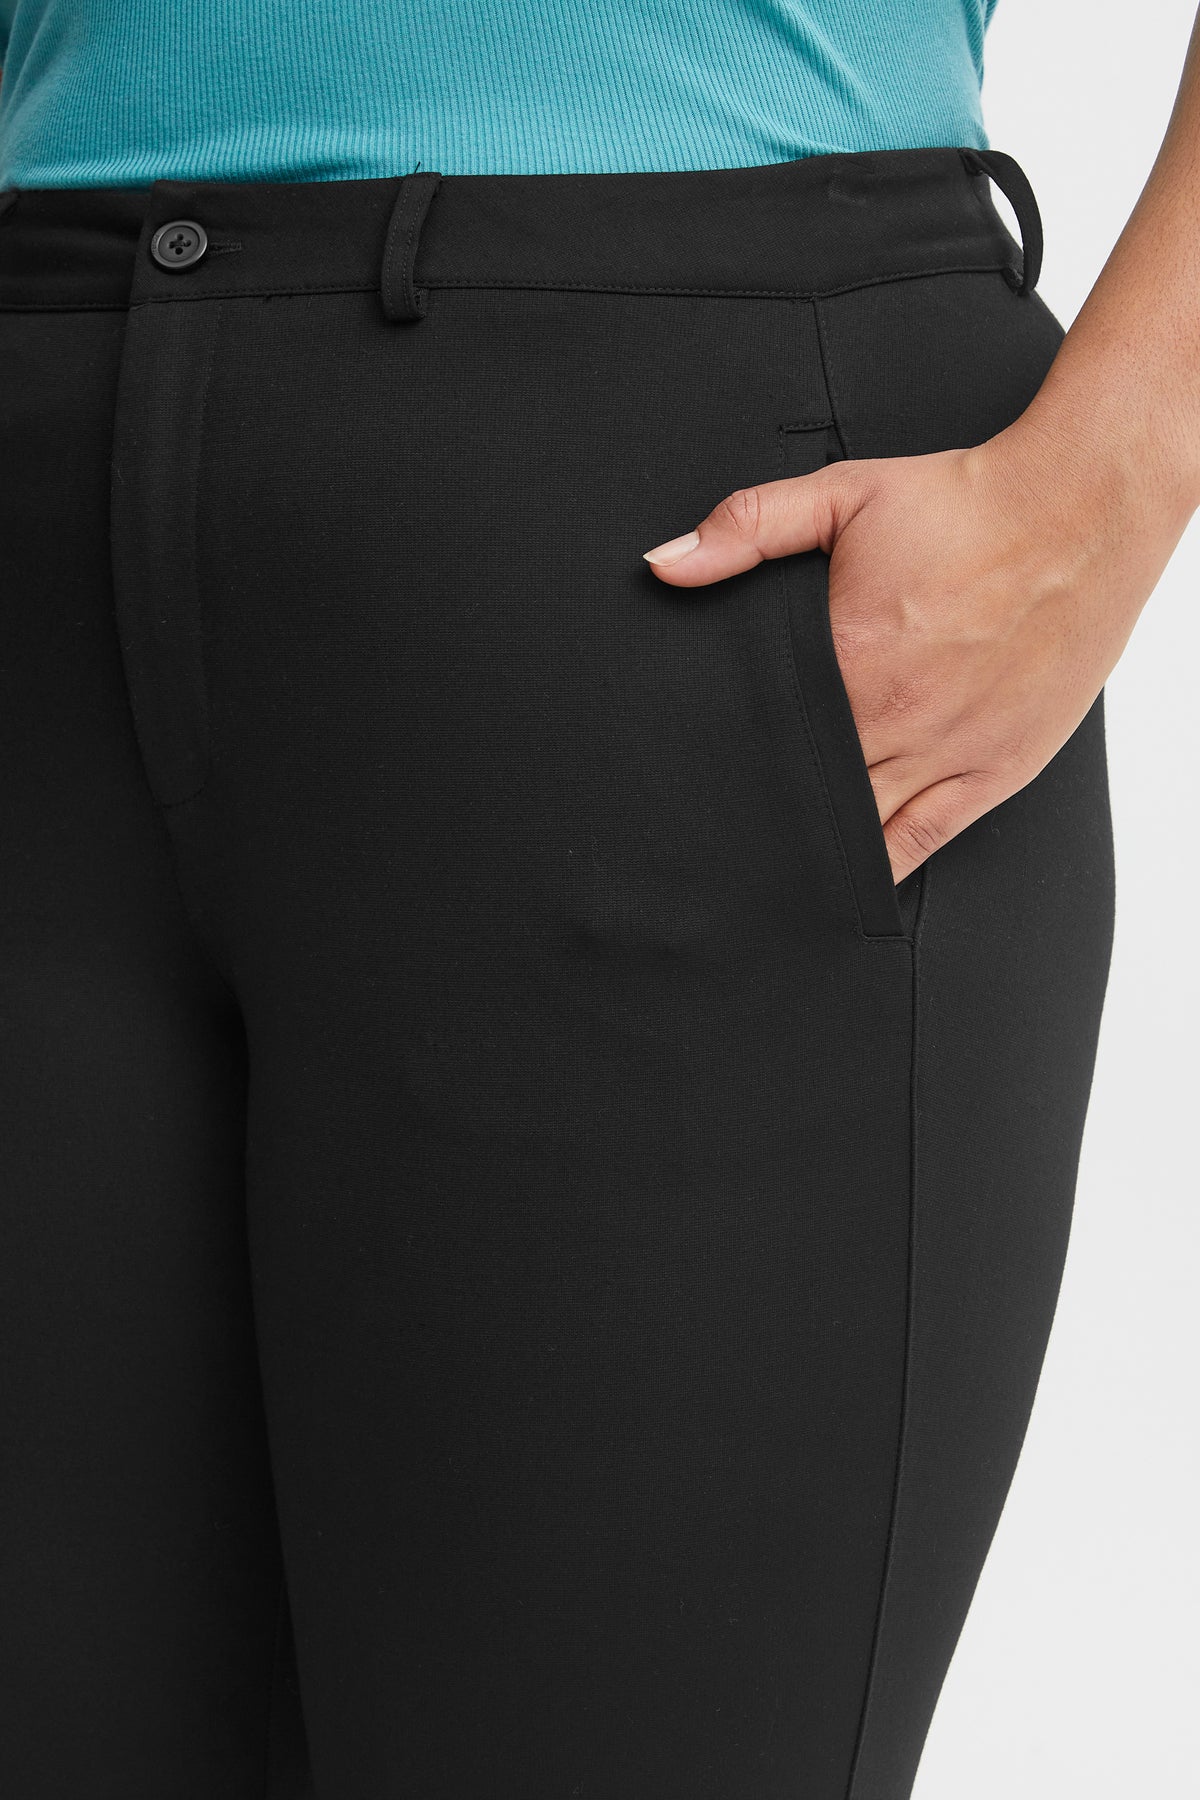 The Naomi Curve Trouser in Black